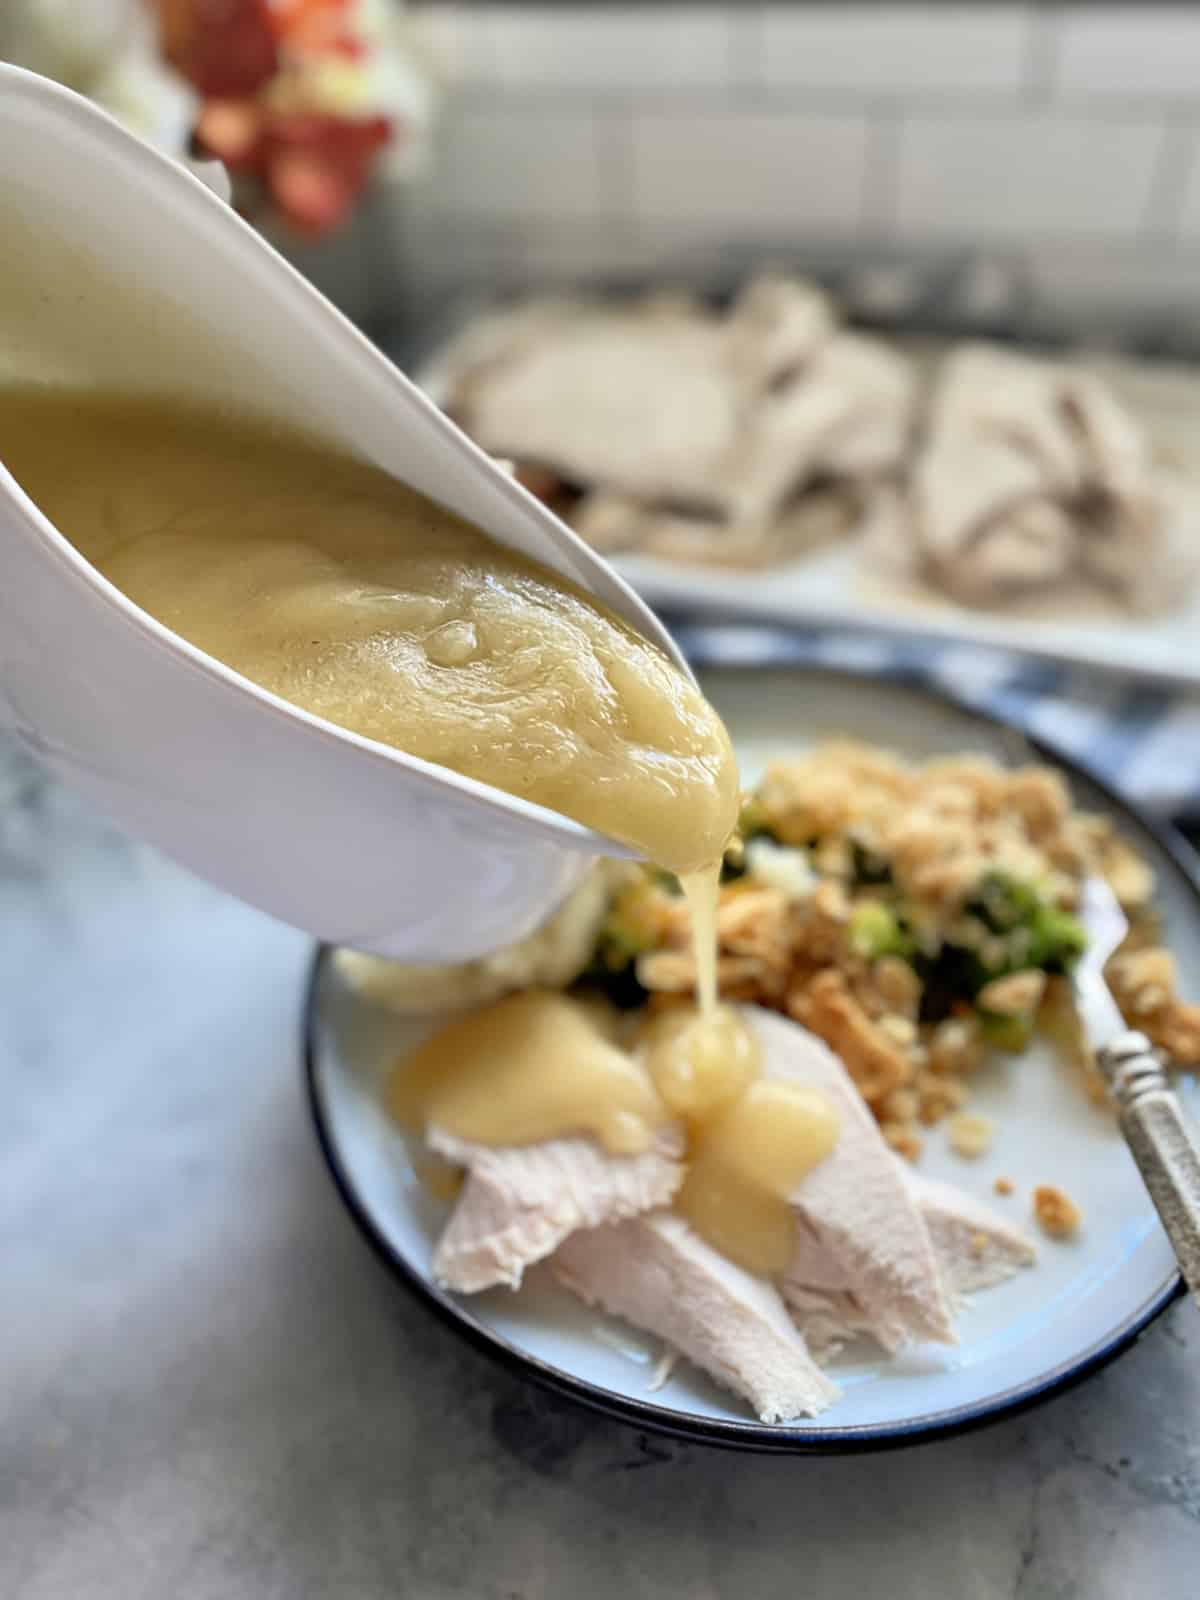 How to Make Turkey Gravy